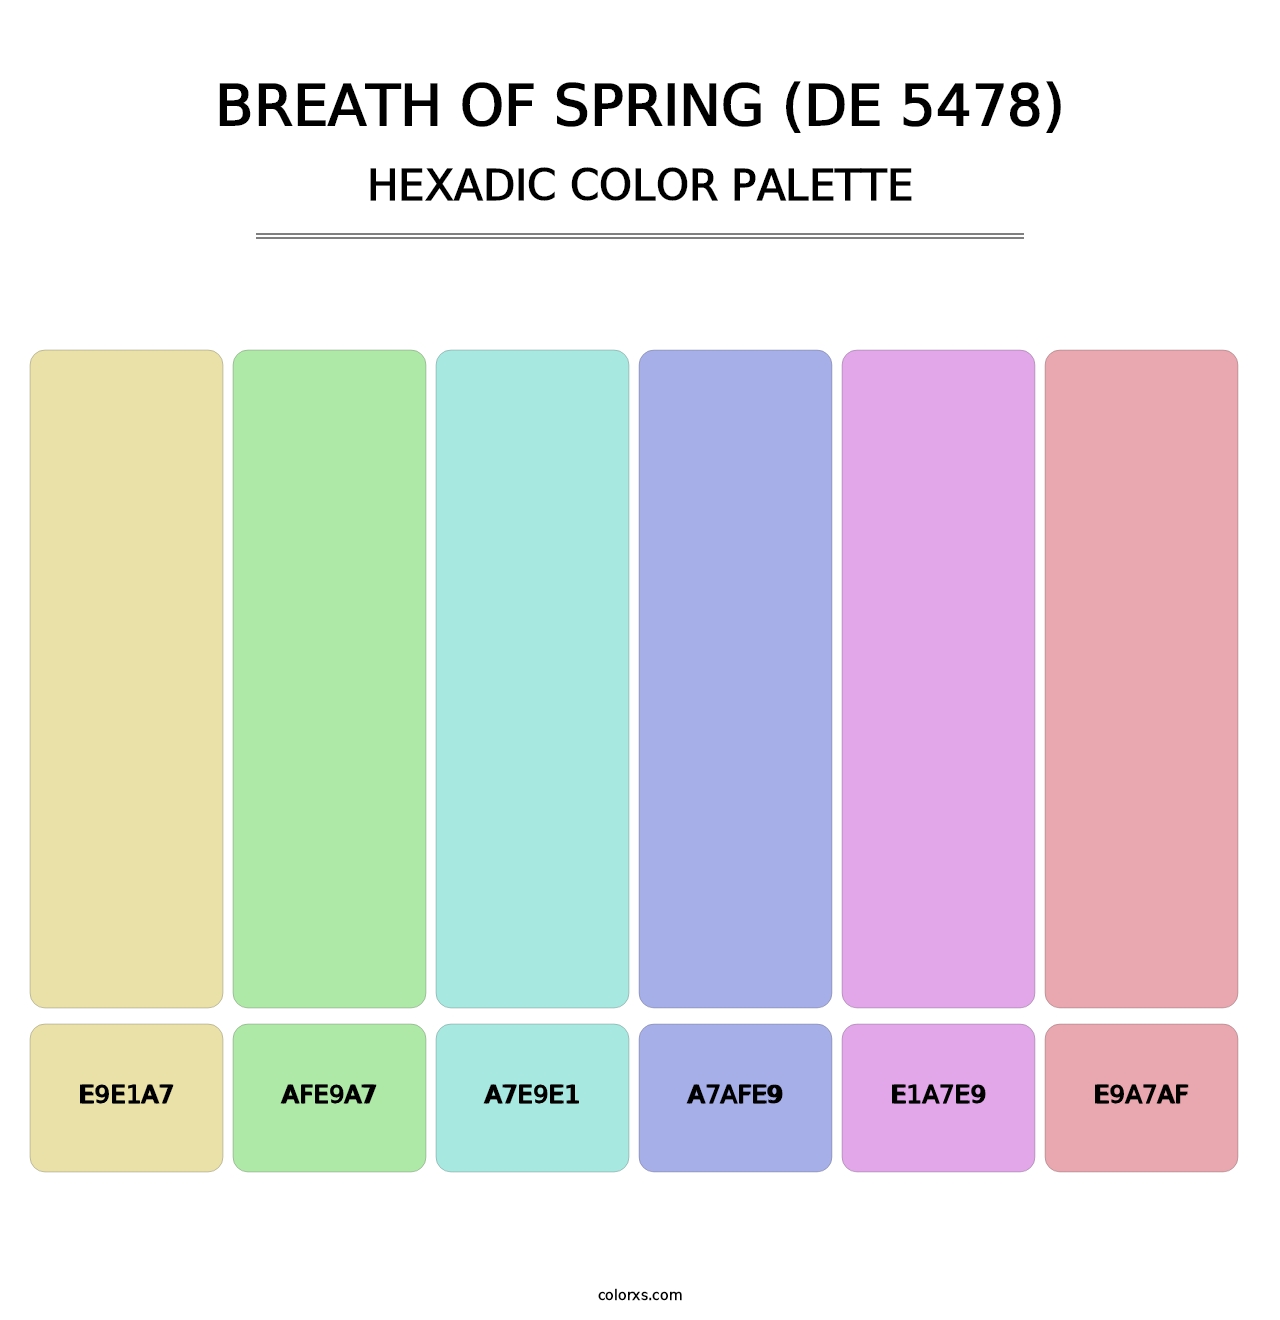 Breath of Spring (DE 5478) - Hexadic Color Palette